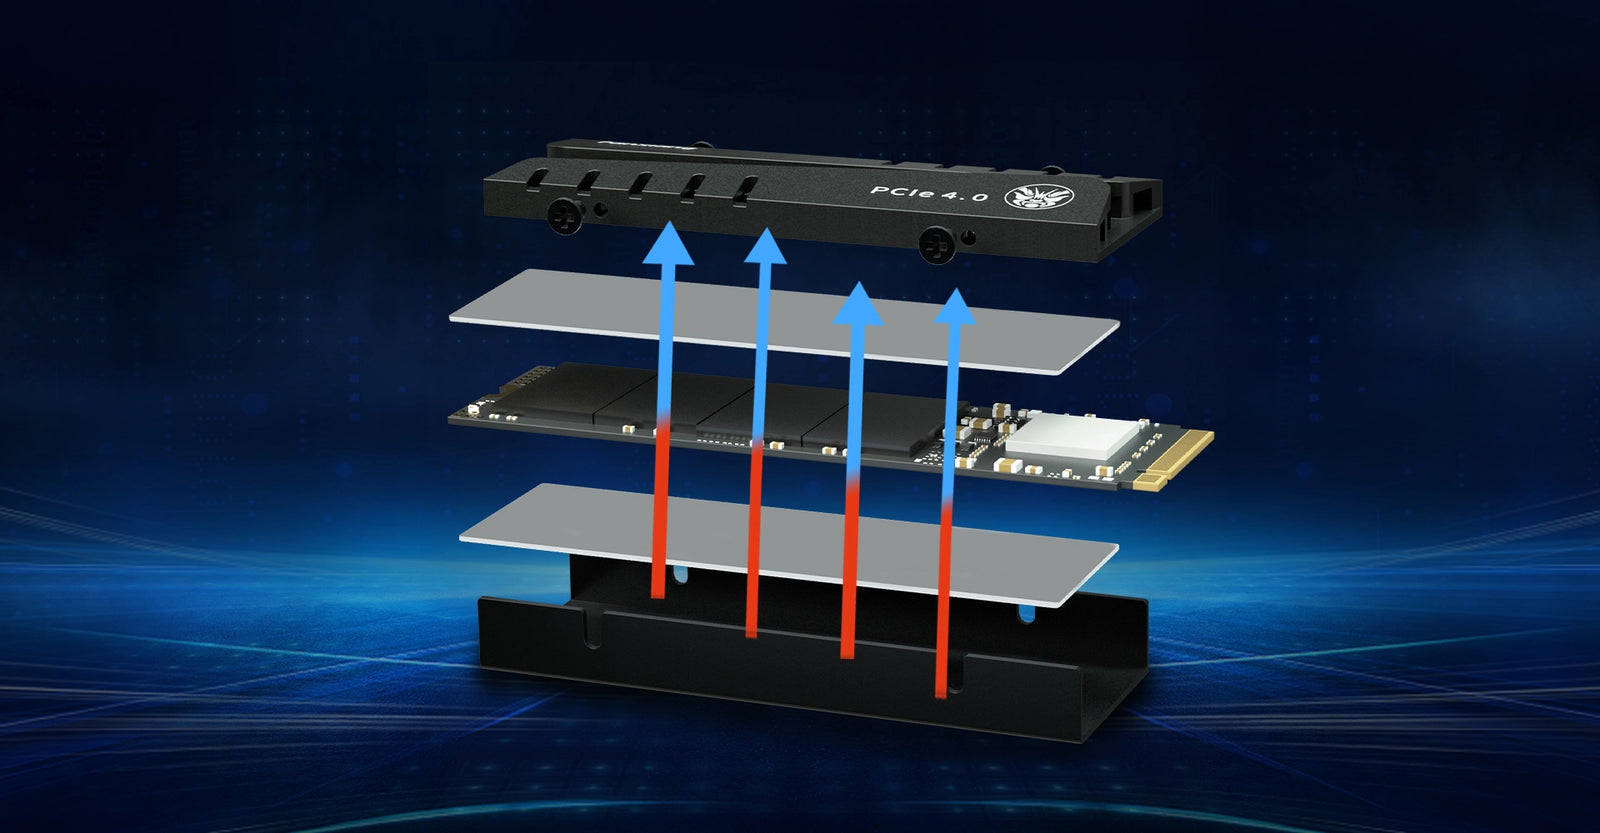 Fanxiang S770 SSD avec Dissipateur Thermique - 2 To - SSD M.2 Interne -  PCIe 4.0 M.2